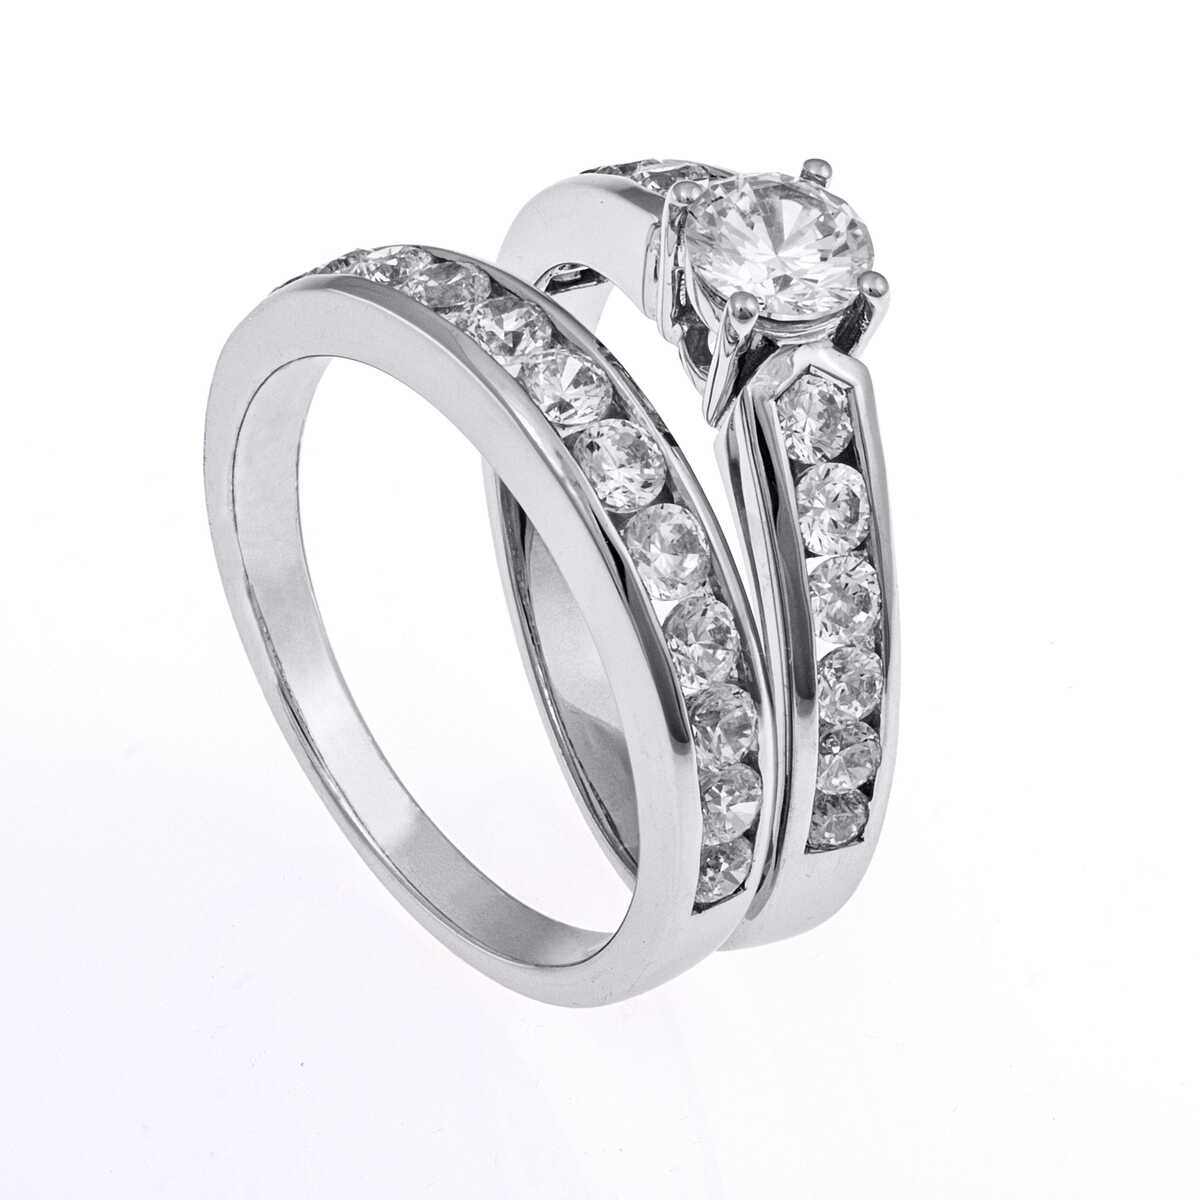 wedding-rings-set-2021-08-26-15-29-19-utc-(1)-(1)_optimized